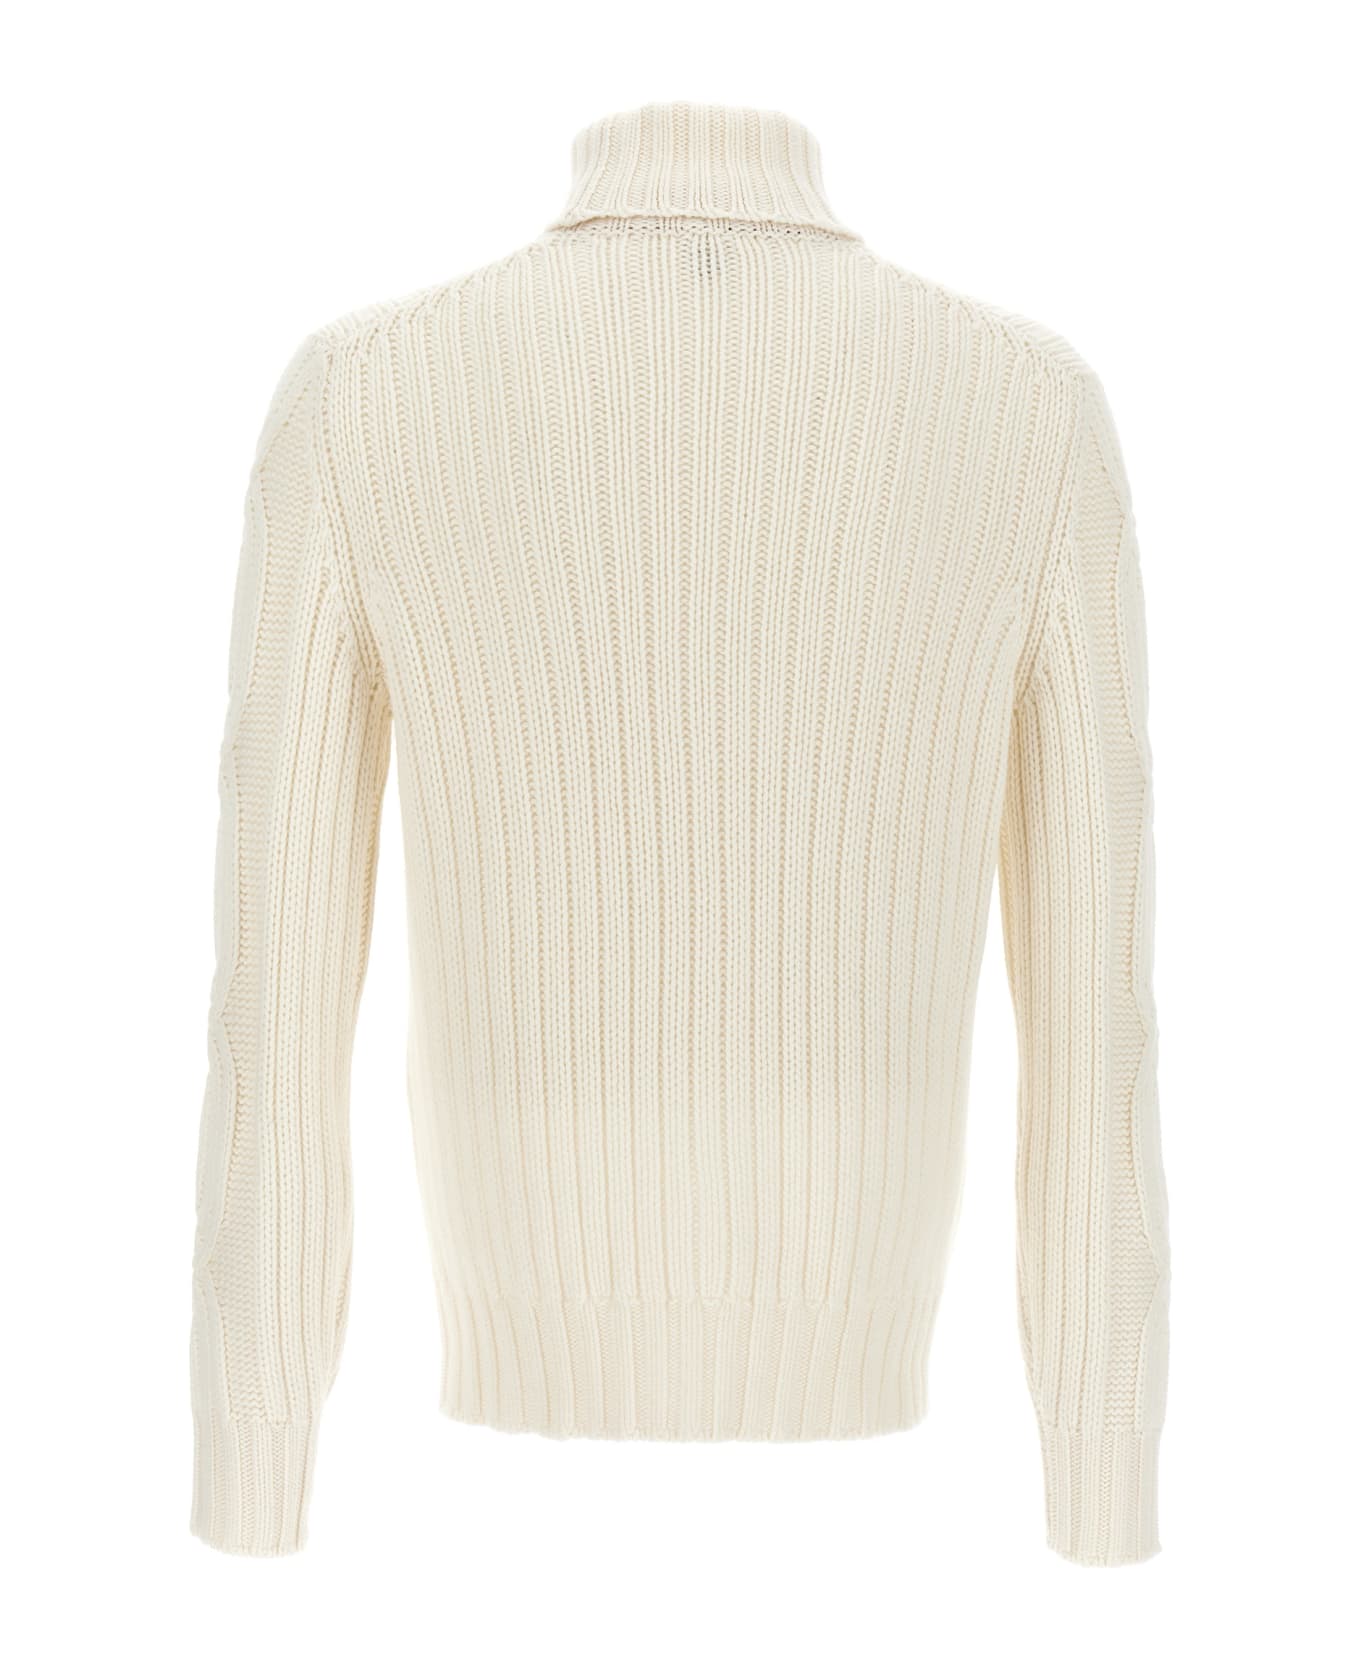 Brunello Cucinelli Braided Cashmere Turtleneck Sweater - Cream